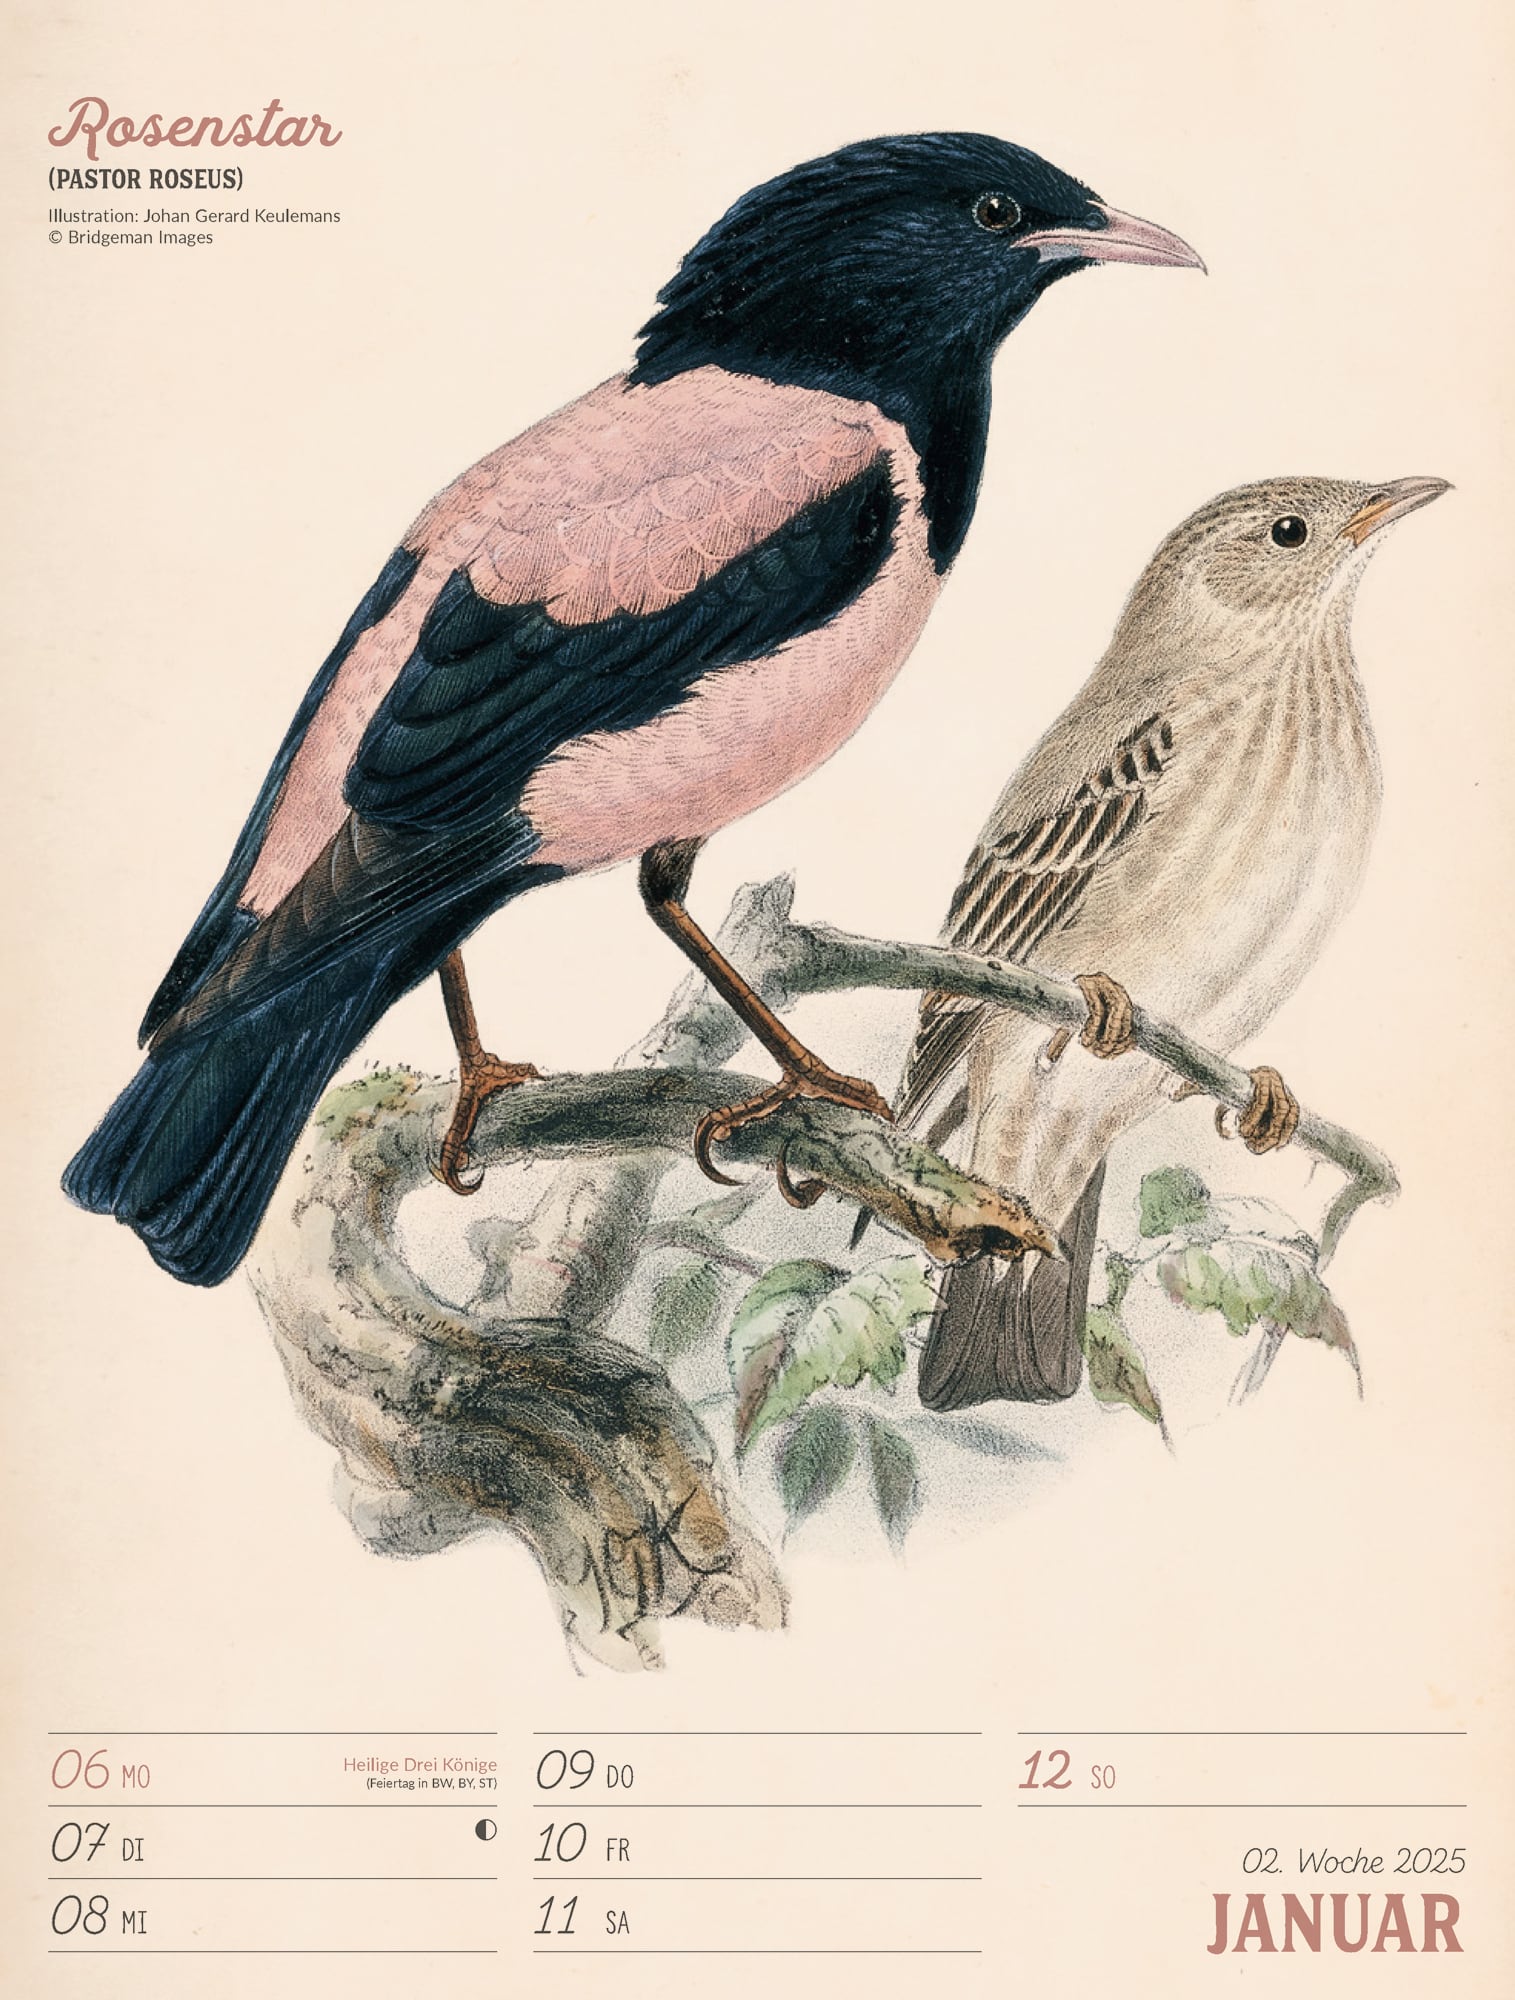 Ackermann Calendar The wonderful World of Birds 2025 - Weekly Planner - Inside View 03